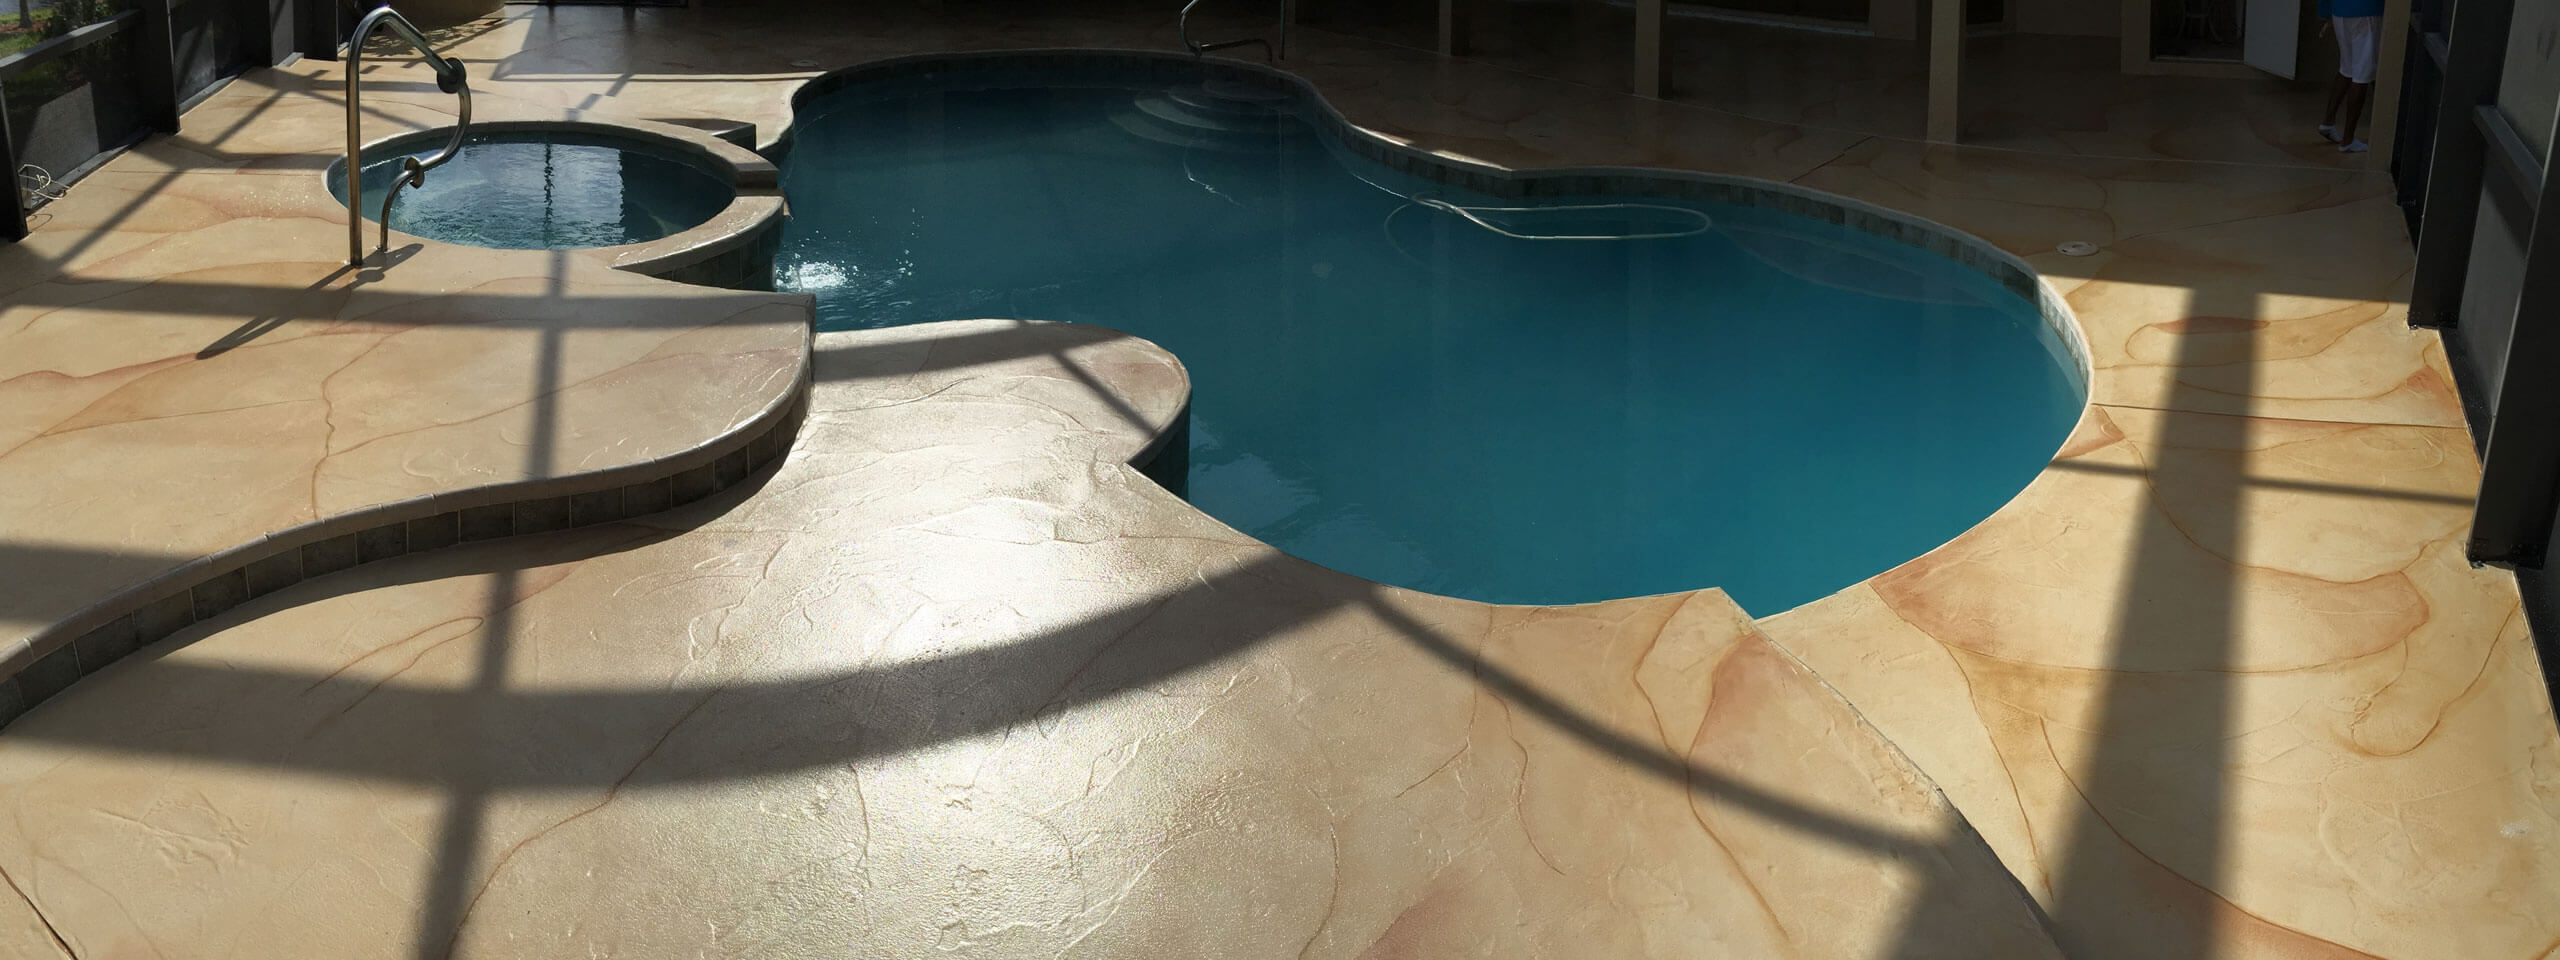 Eurotile-SoFlo Pool Decks and Pavers of Palm Beach Gardens